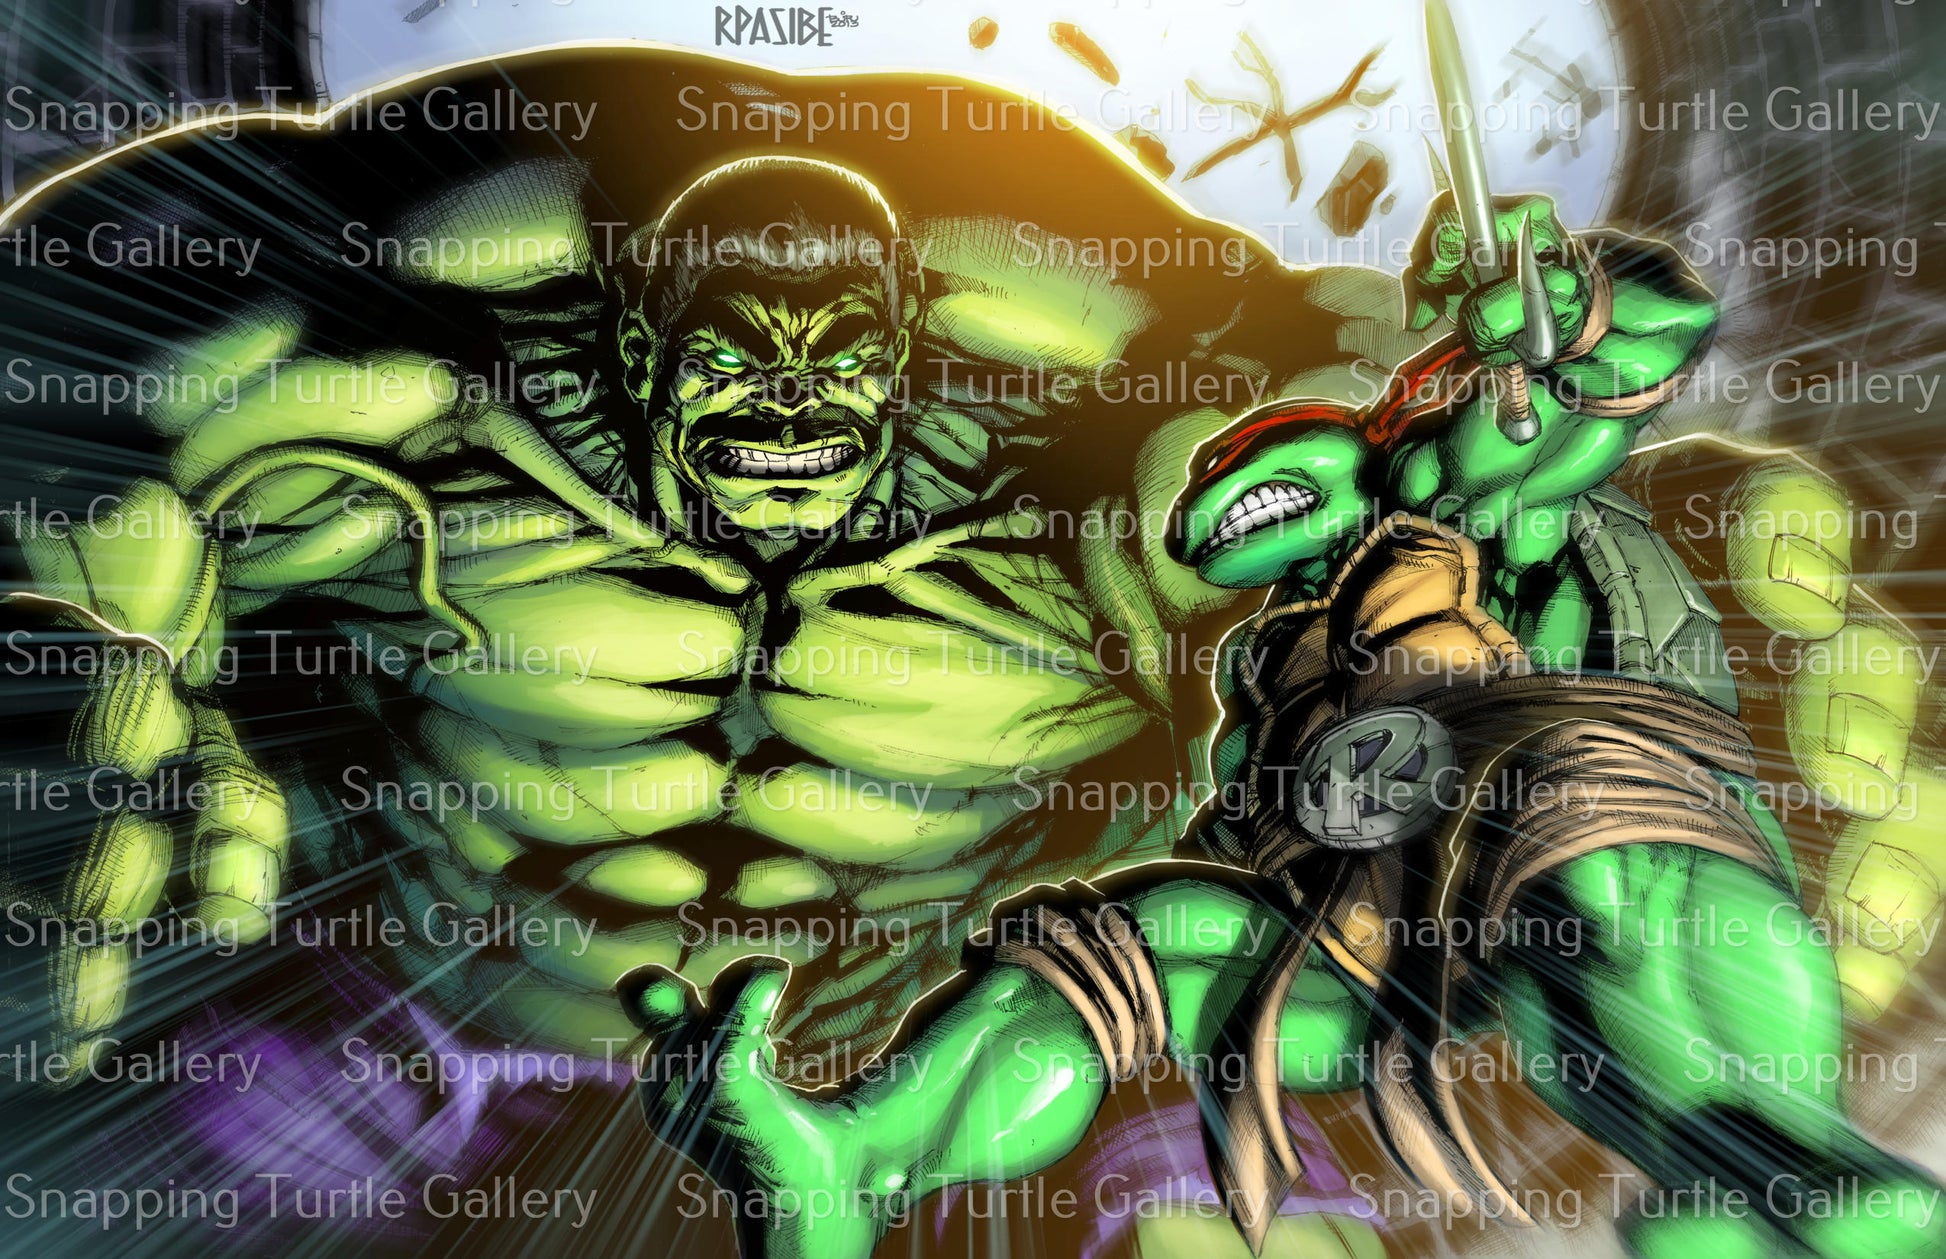 Hulk Vs Raph - Snapping Turtle Gallery